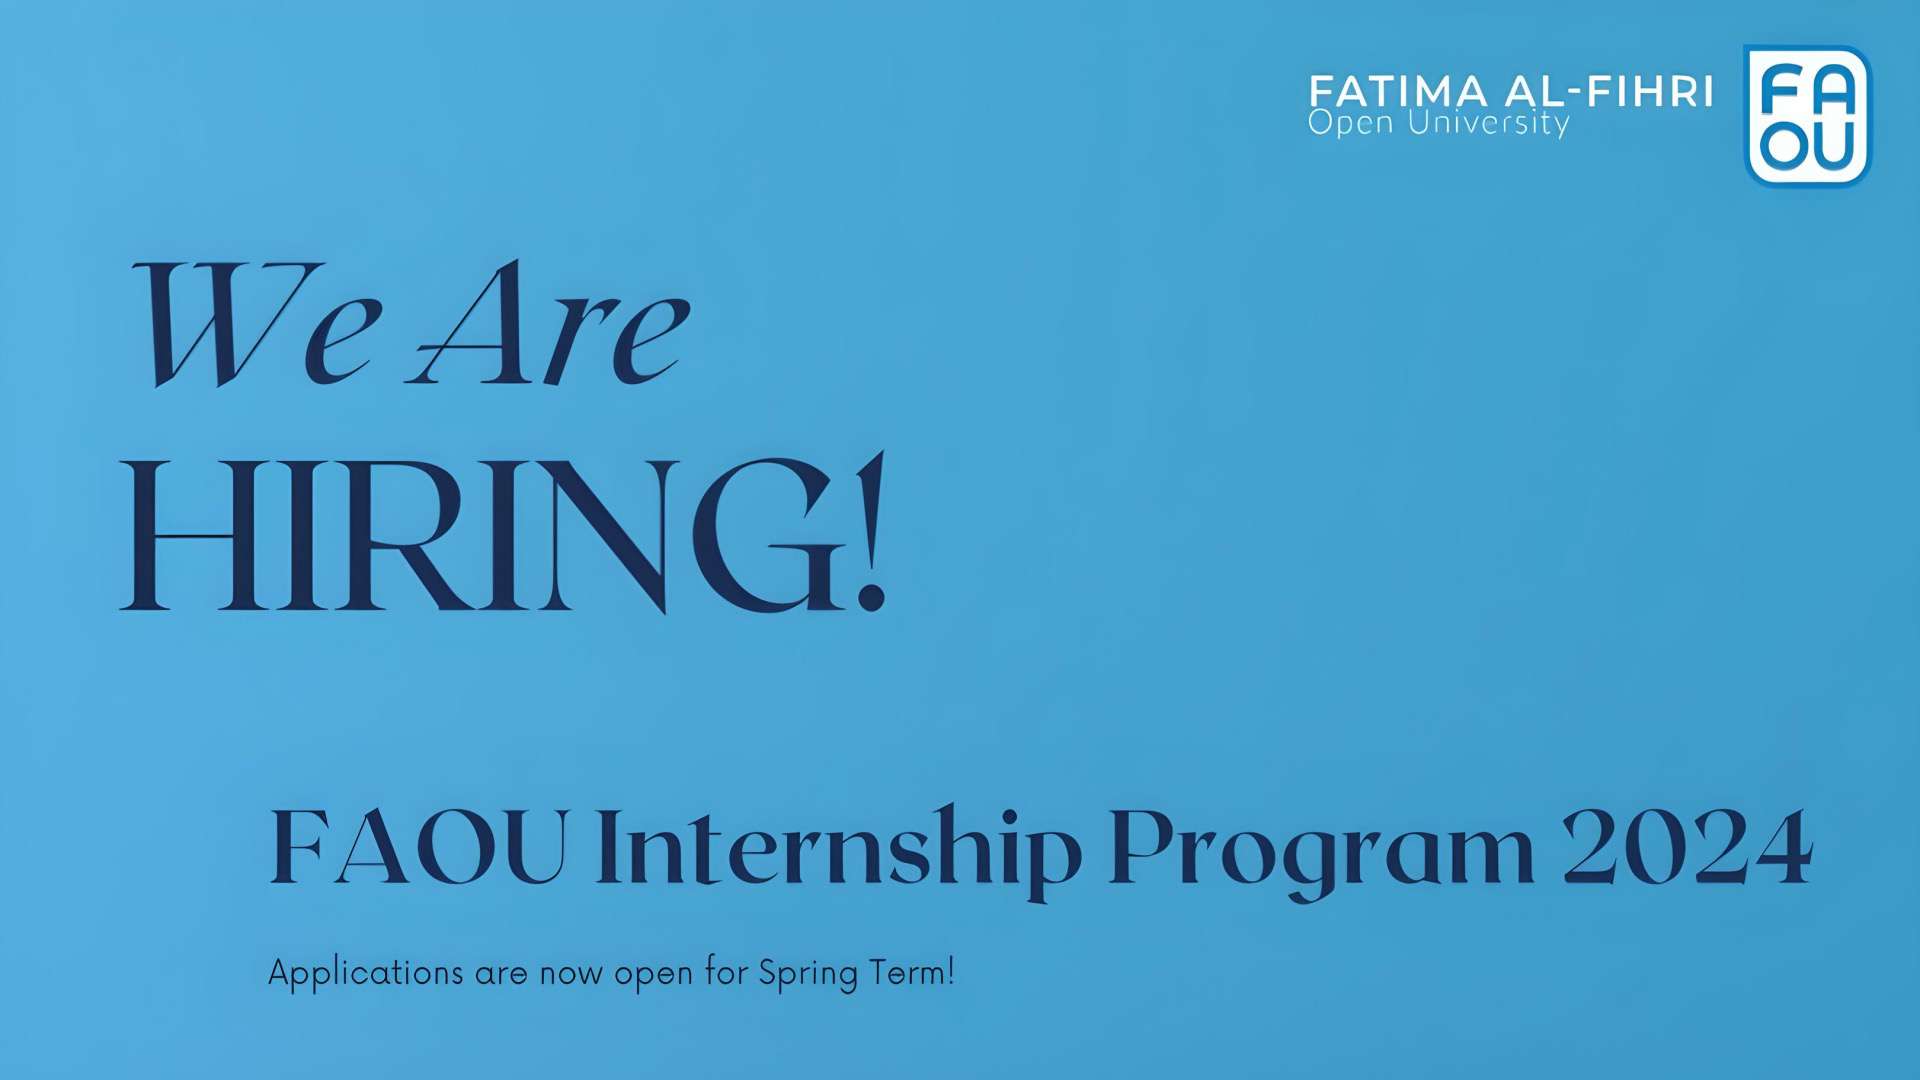 Fatima Al-Fihri Open University (FAOU) Internship